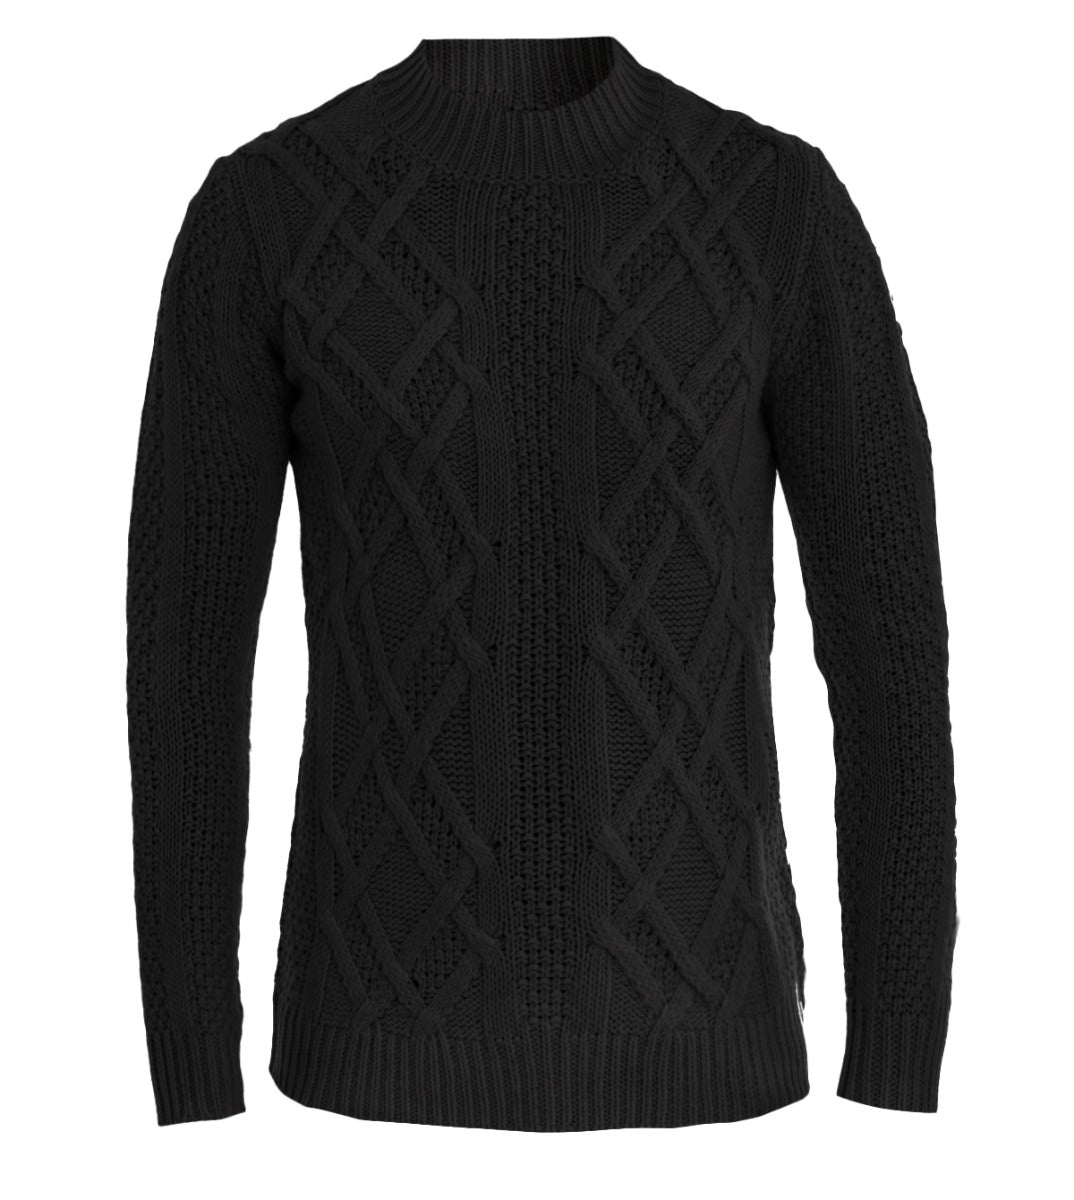 Men's Pullover Black Sweater Woven Texture Braids Pattern Crewneck Sweater GIOSAL